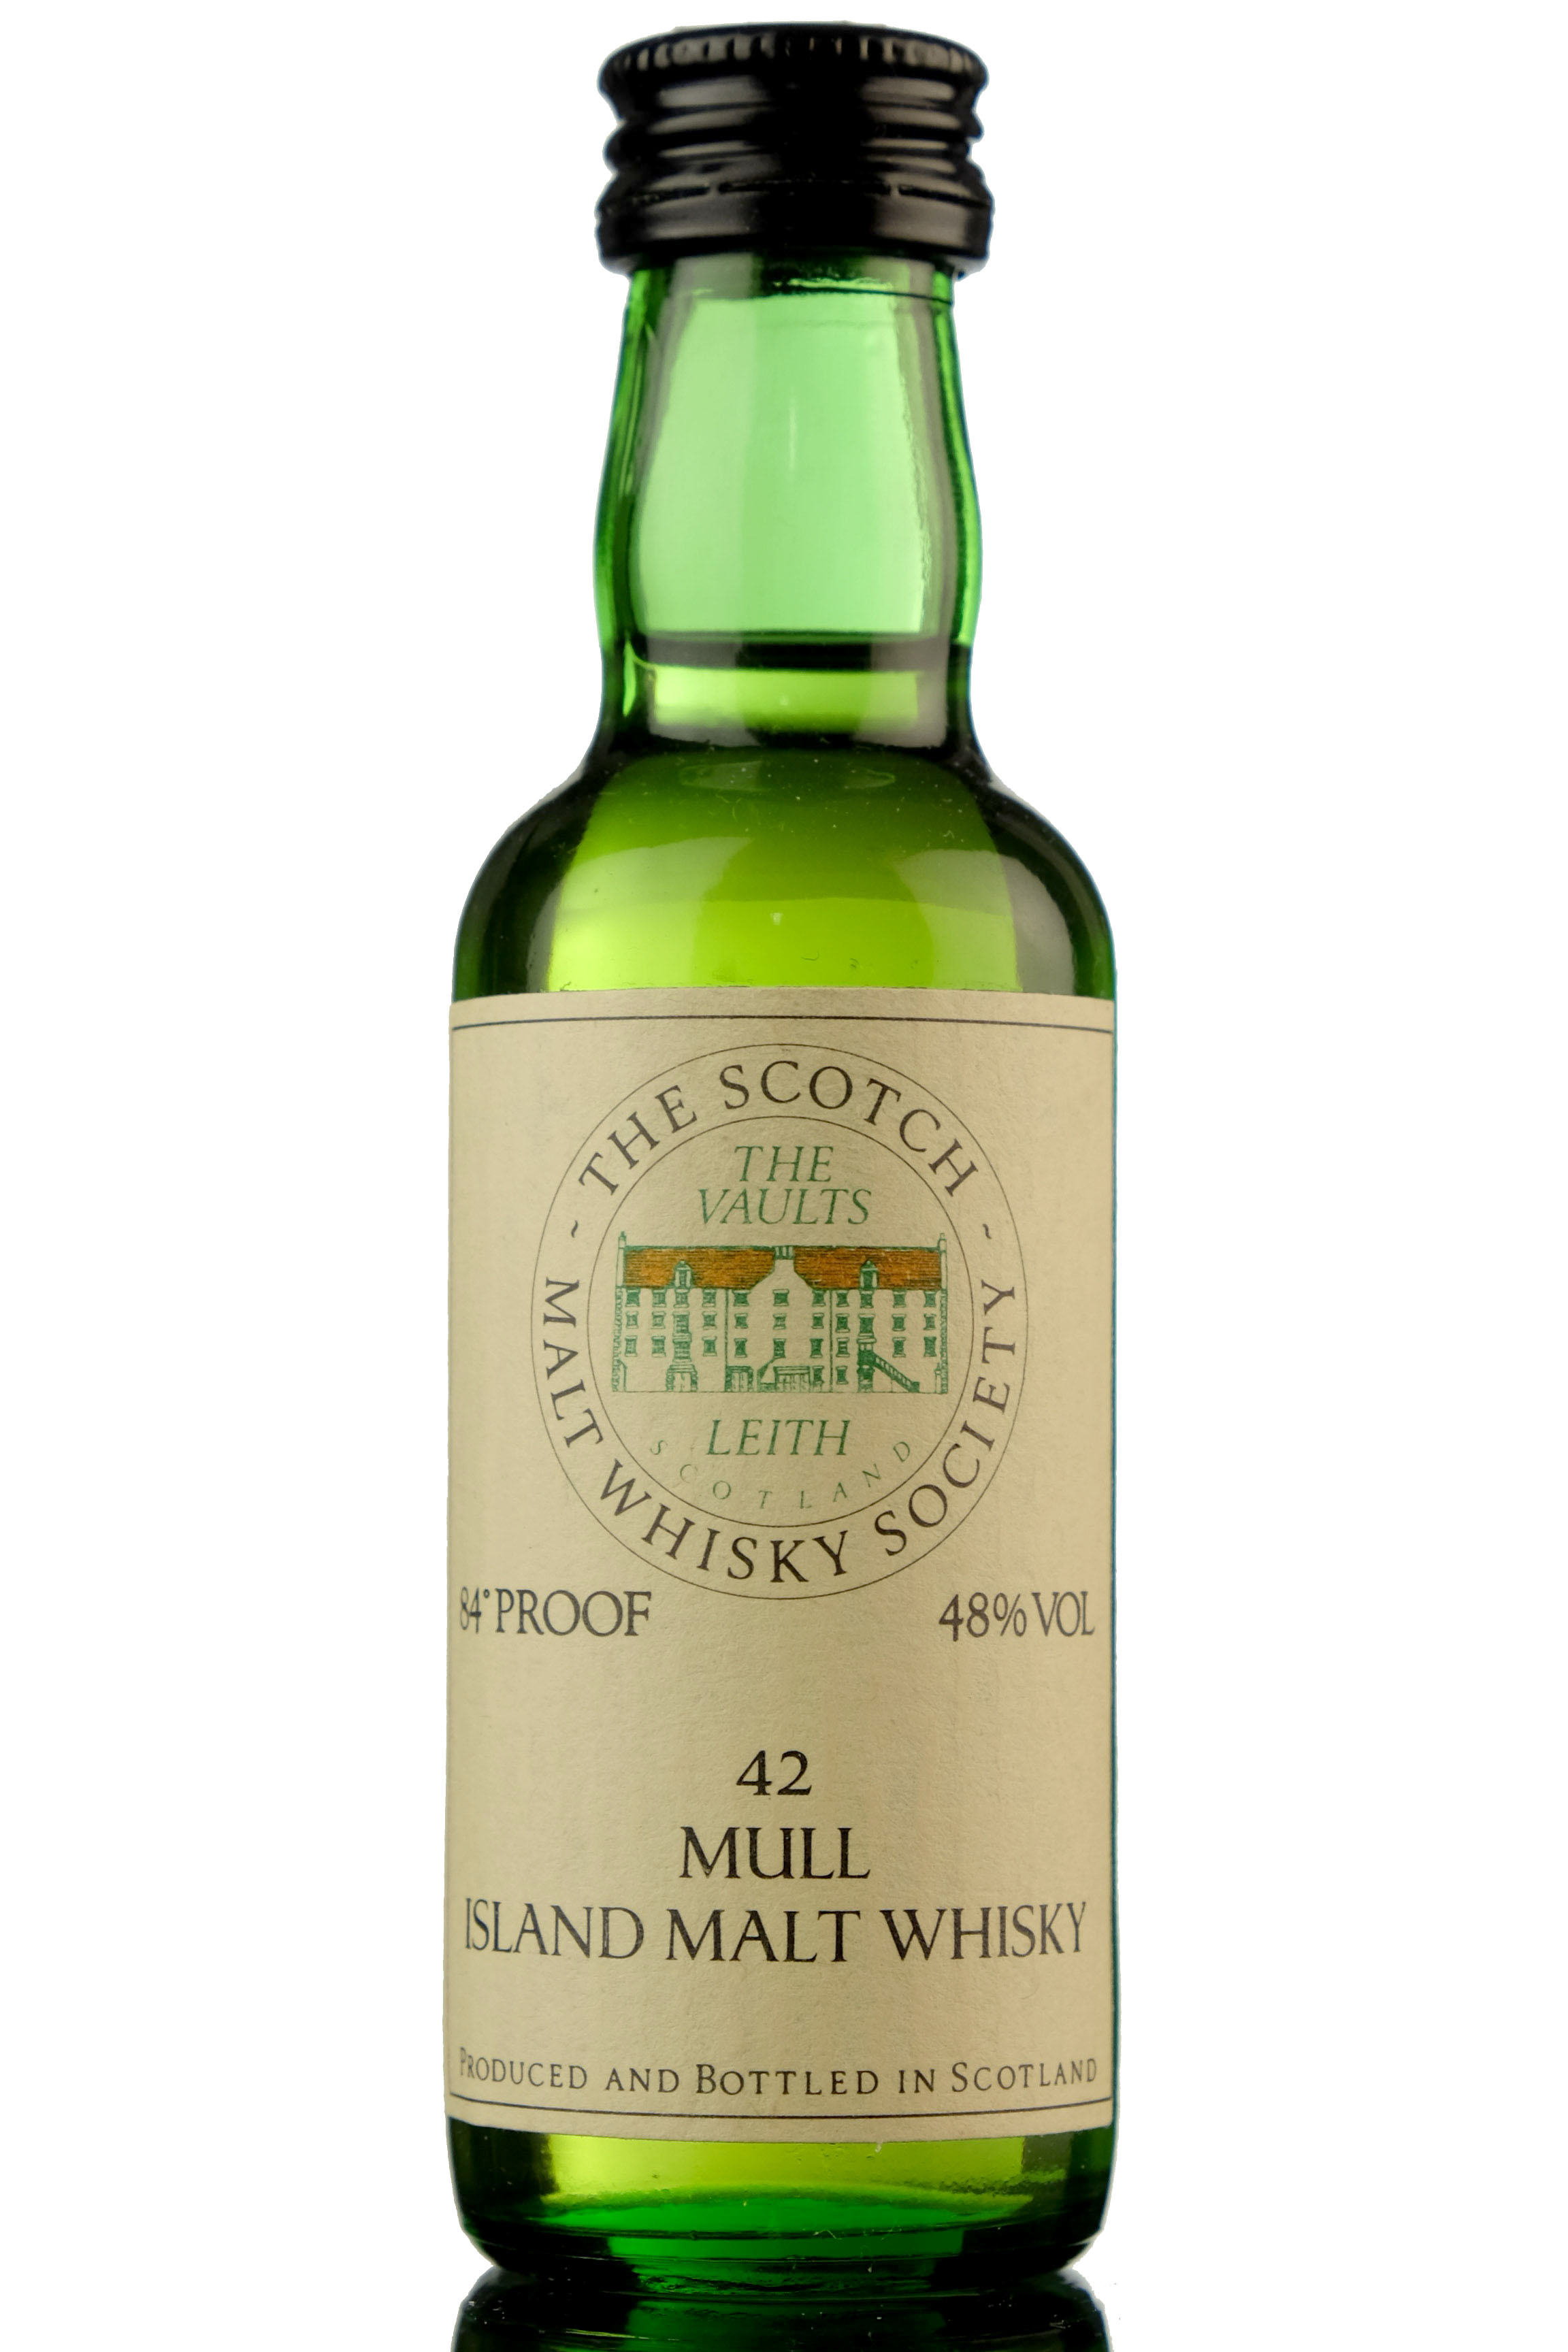 Ledaig (Tobermory) Scotch Malt Whisky Society Miniature